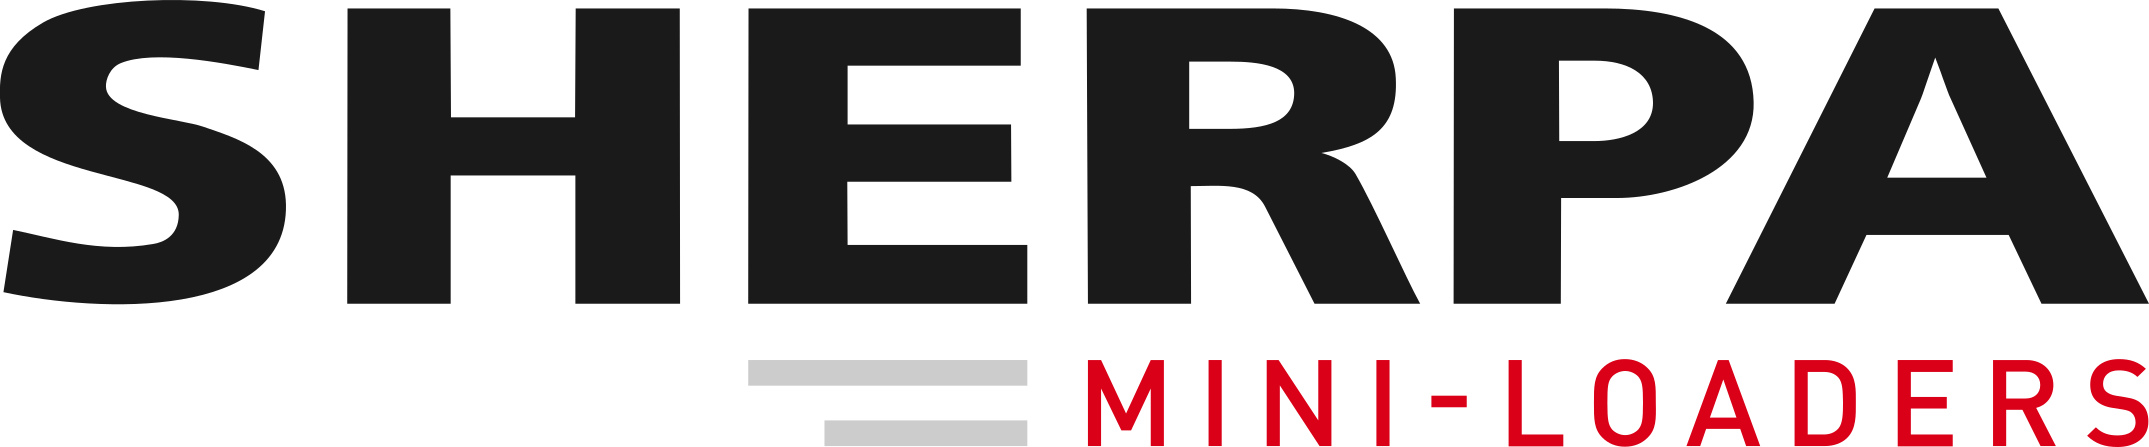 szilas-epito-sherpa-logo (1)